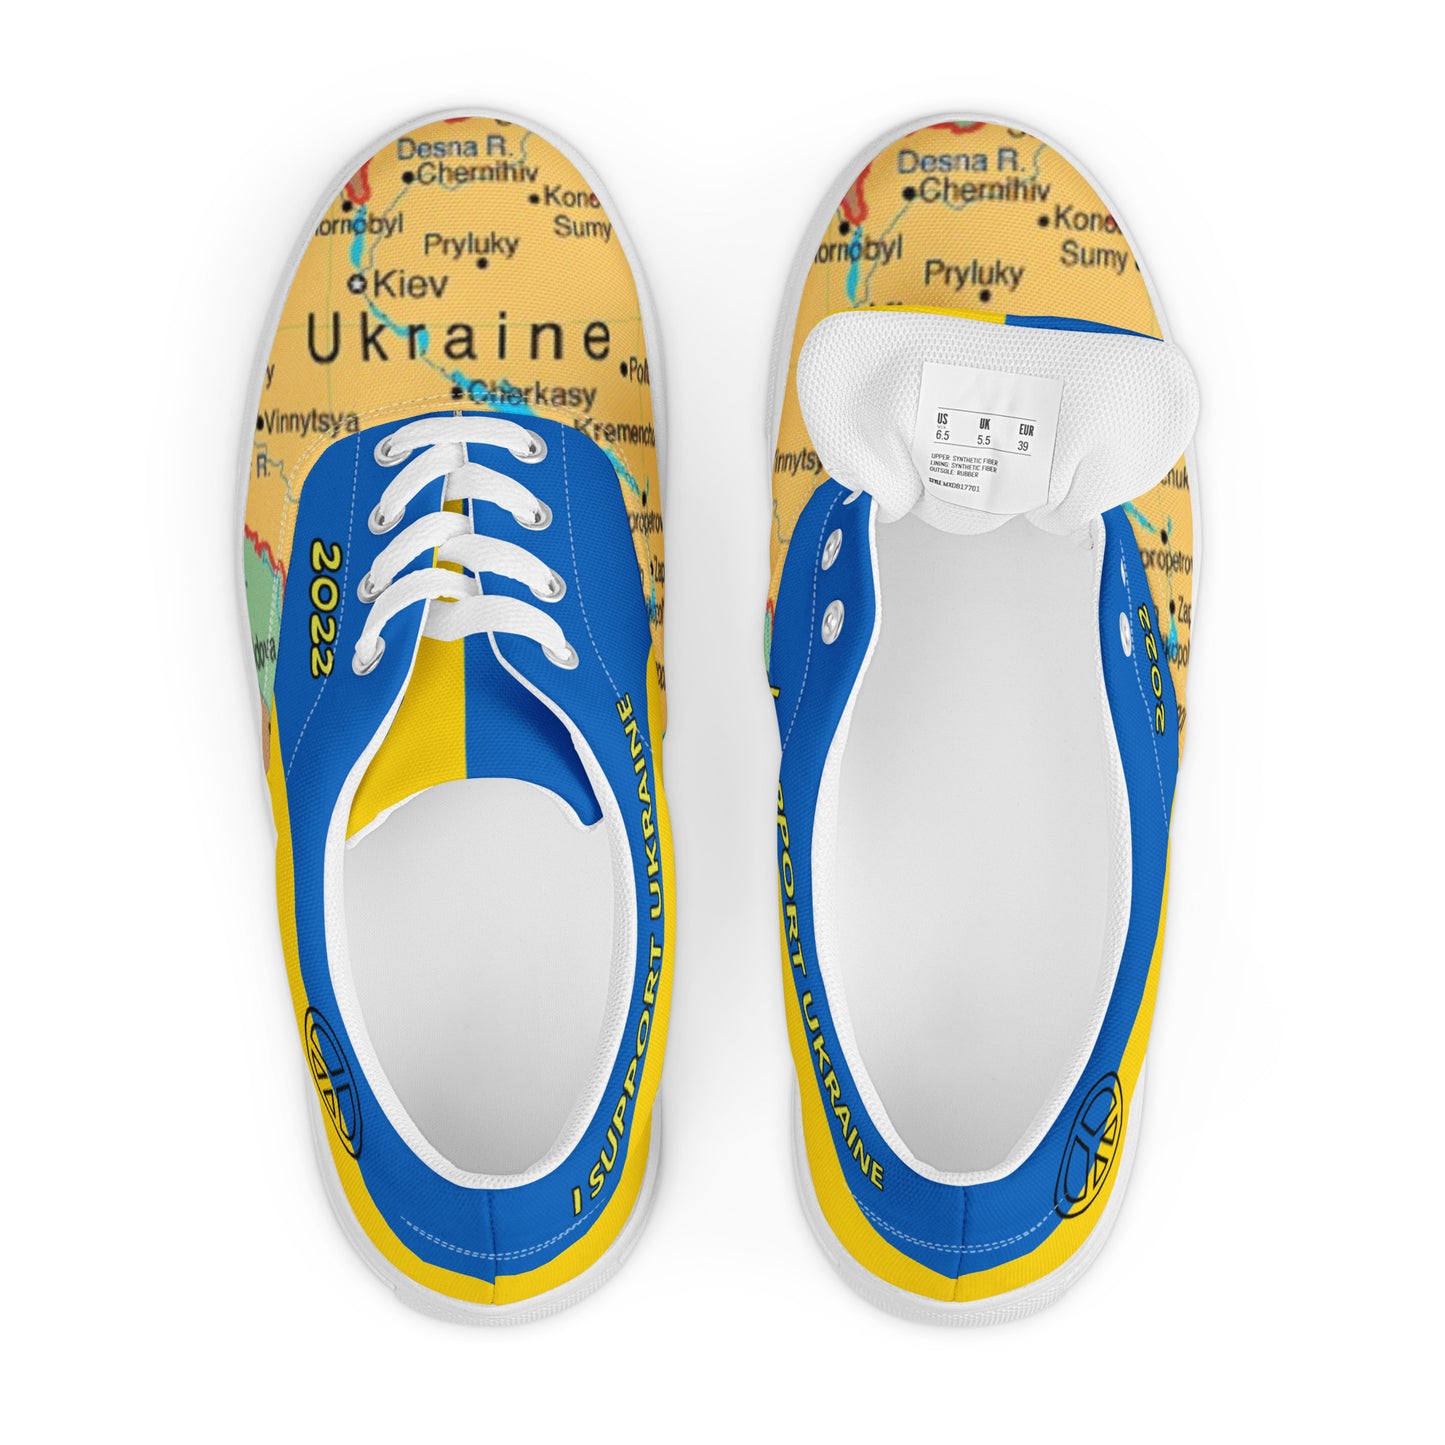 I Support Ukraine Women’s lace-up canvas shoes